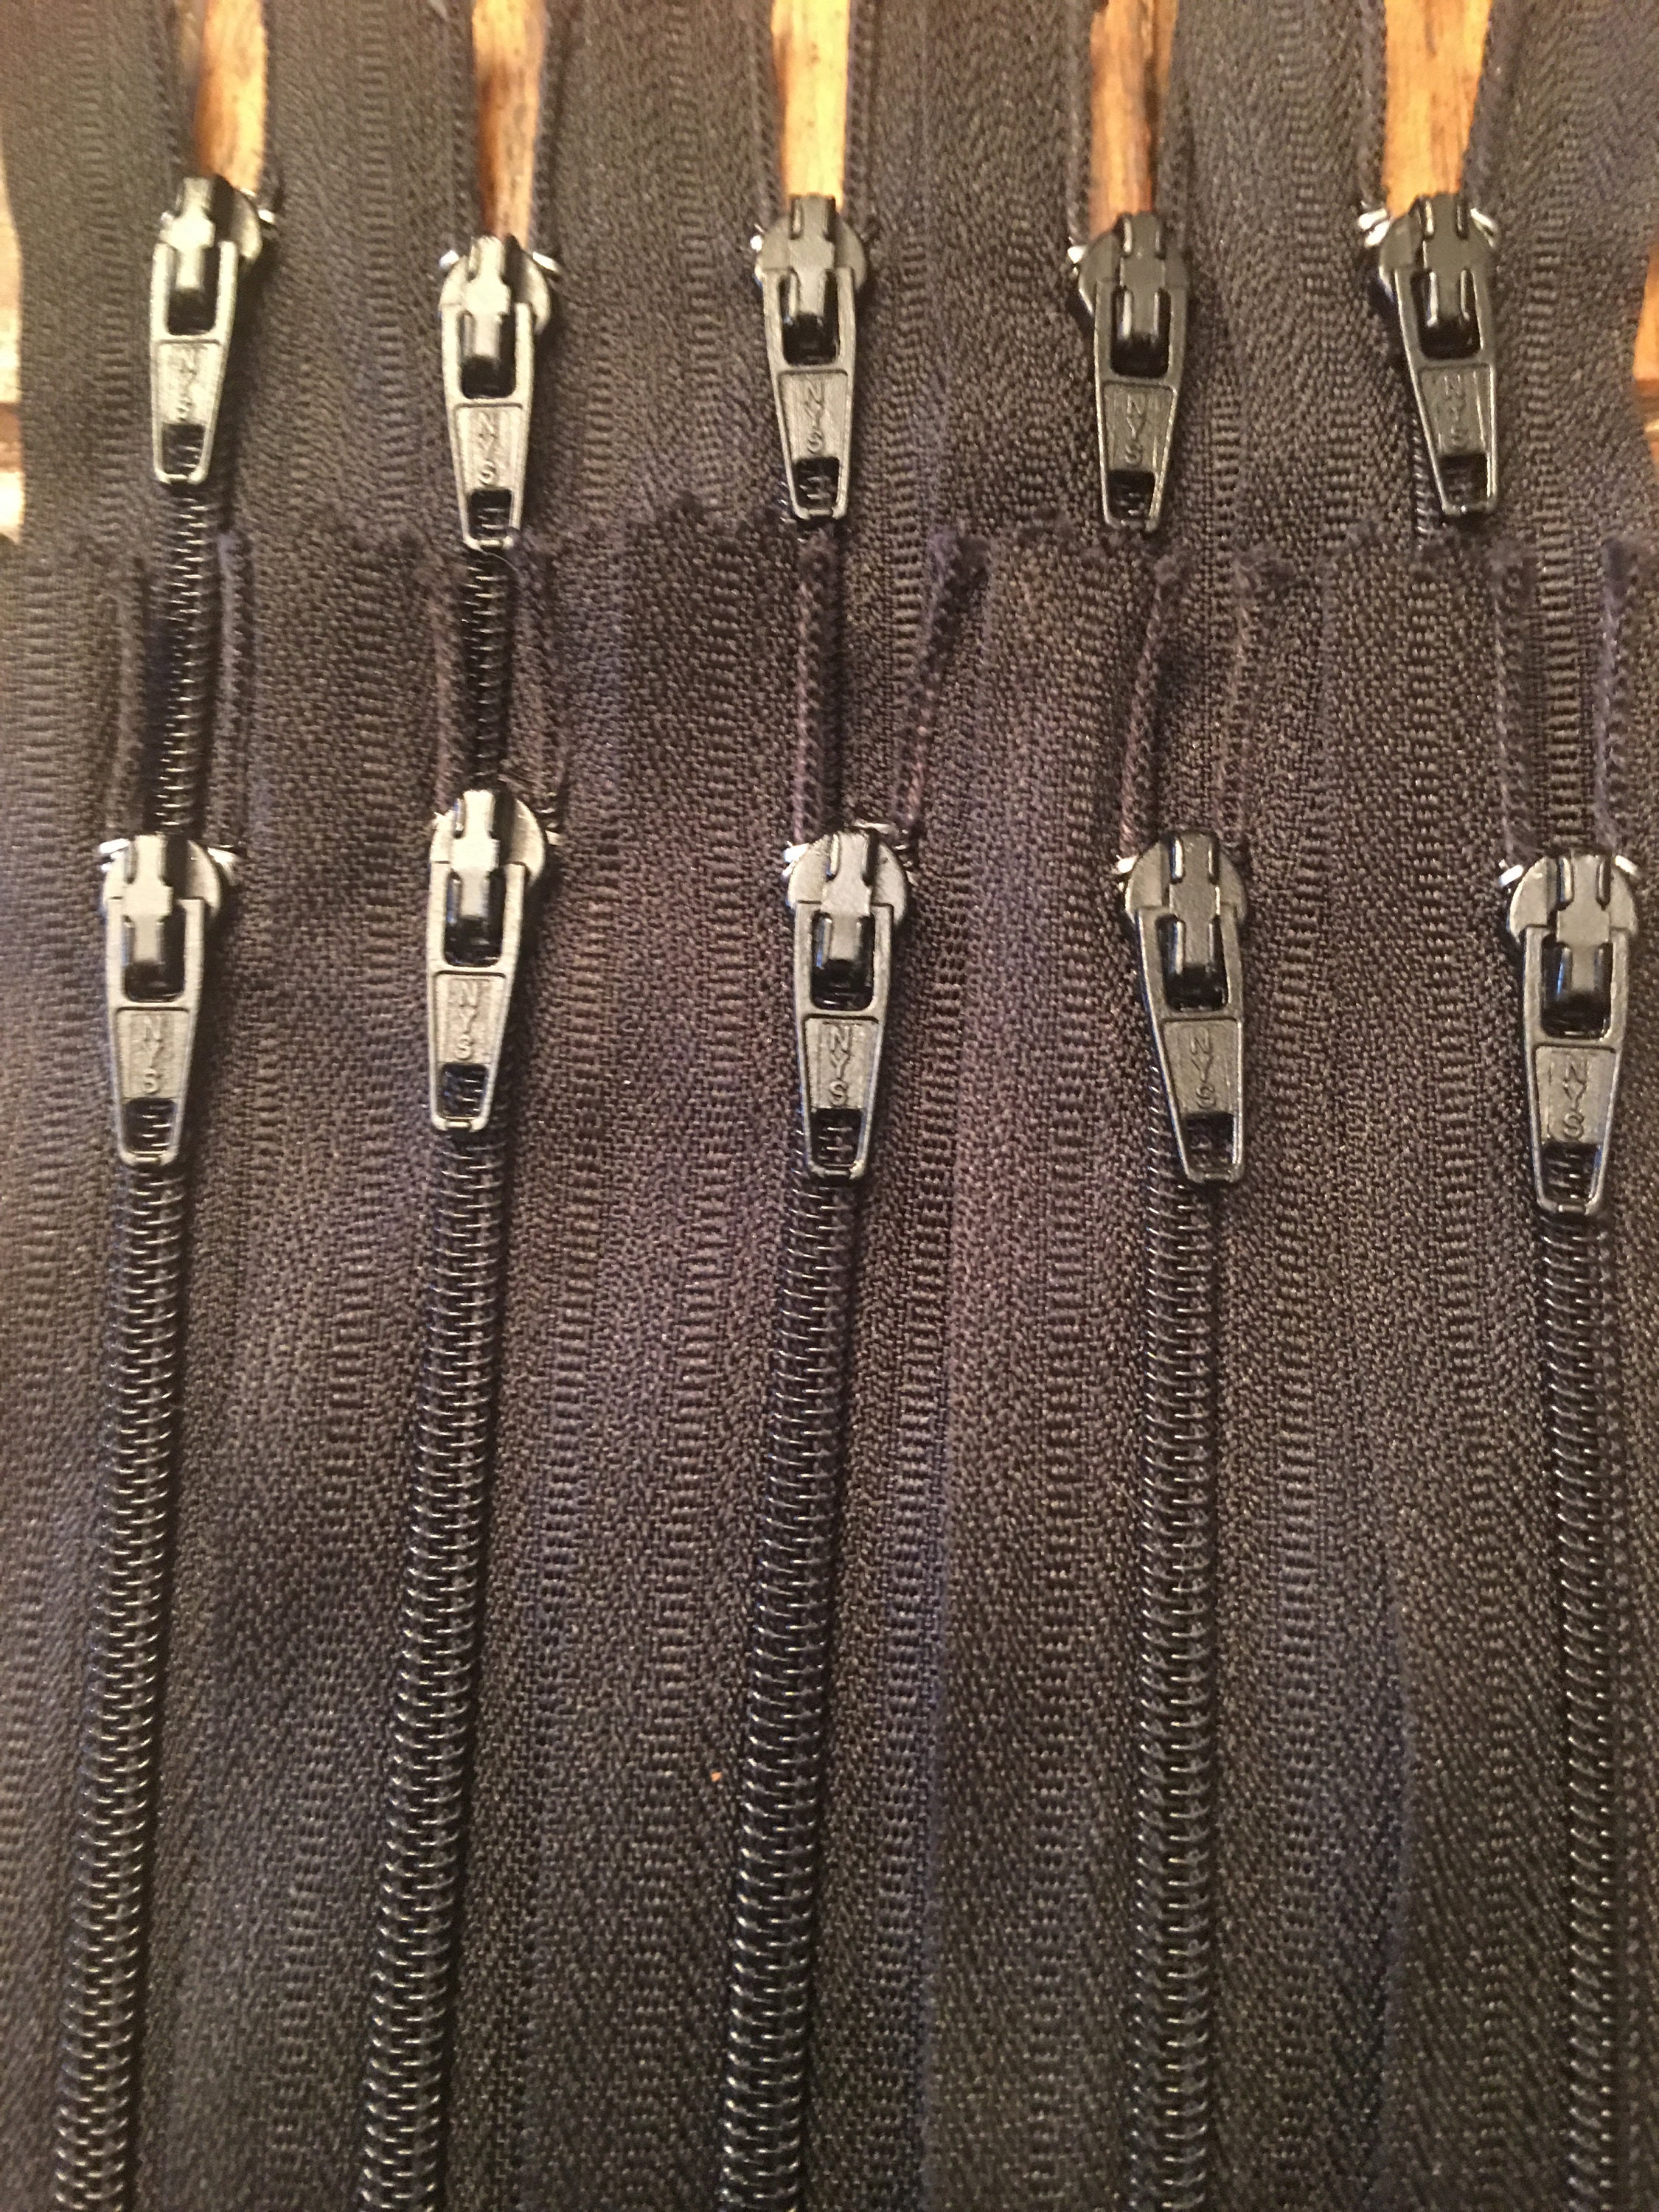 Coats Black Metal Zippers, Open Bottom, 120 Cm 47 Inches Zipper, Jacket  Zipper, Dress Zipper, Coat Zipper, Cardigan Zipper, Bag Zipper 